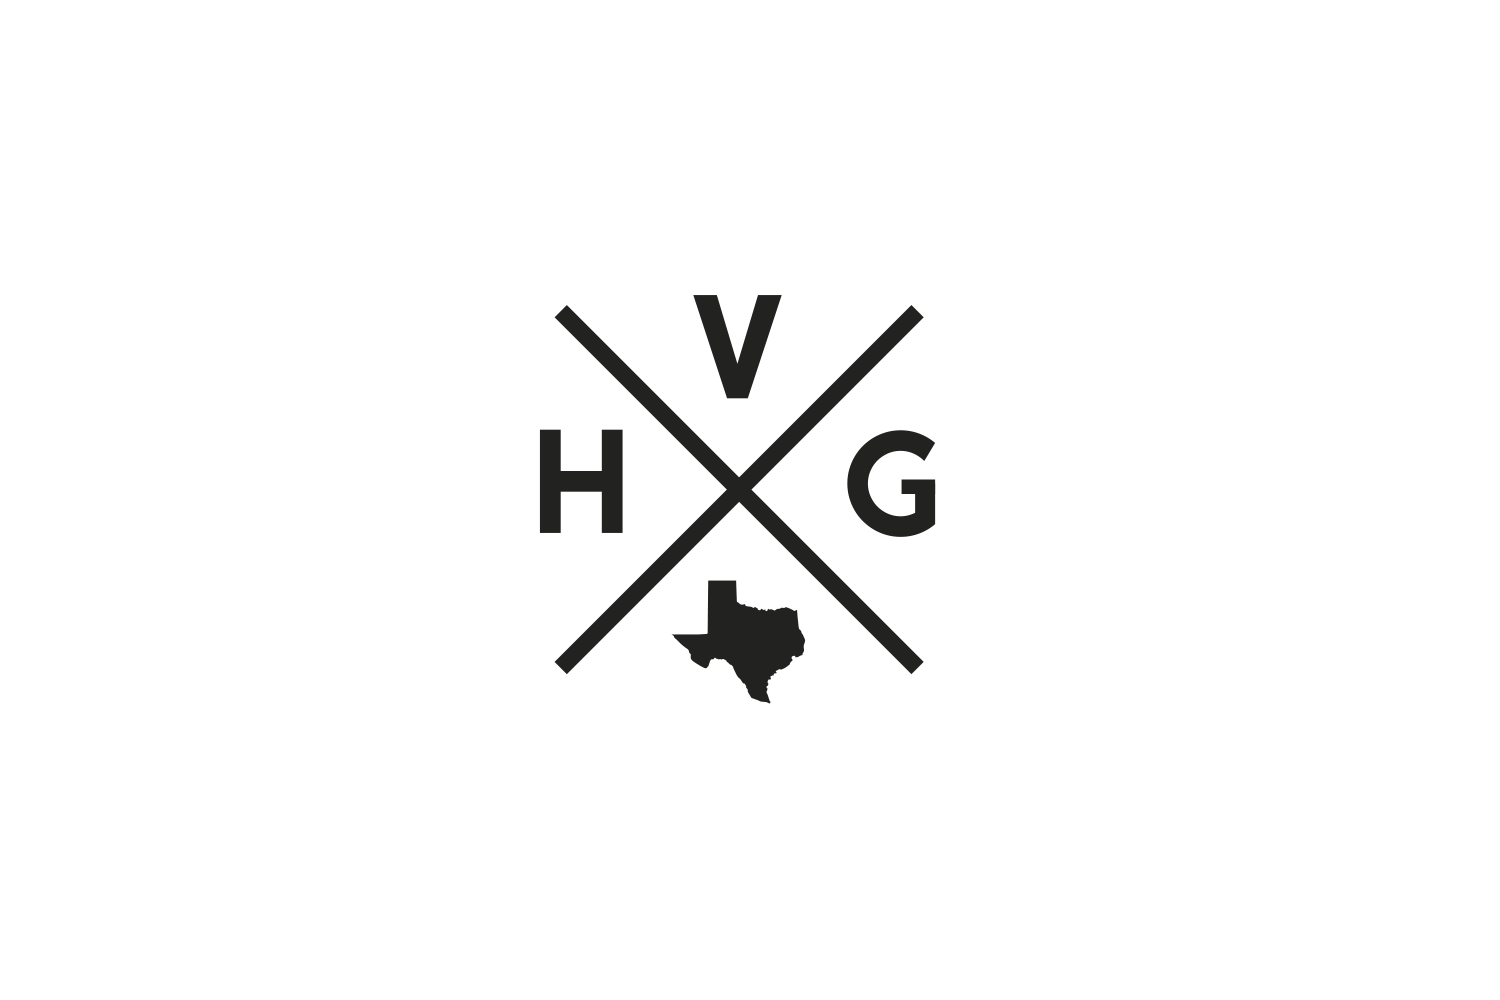  Huggins Venture Group